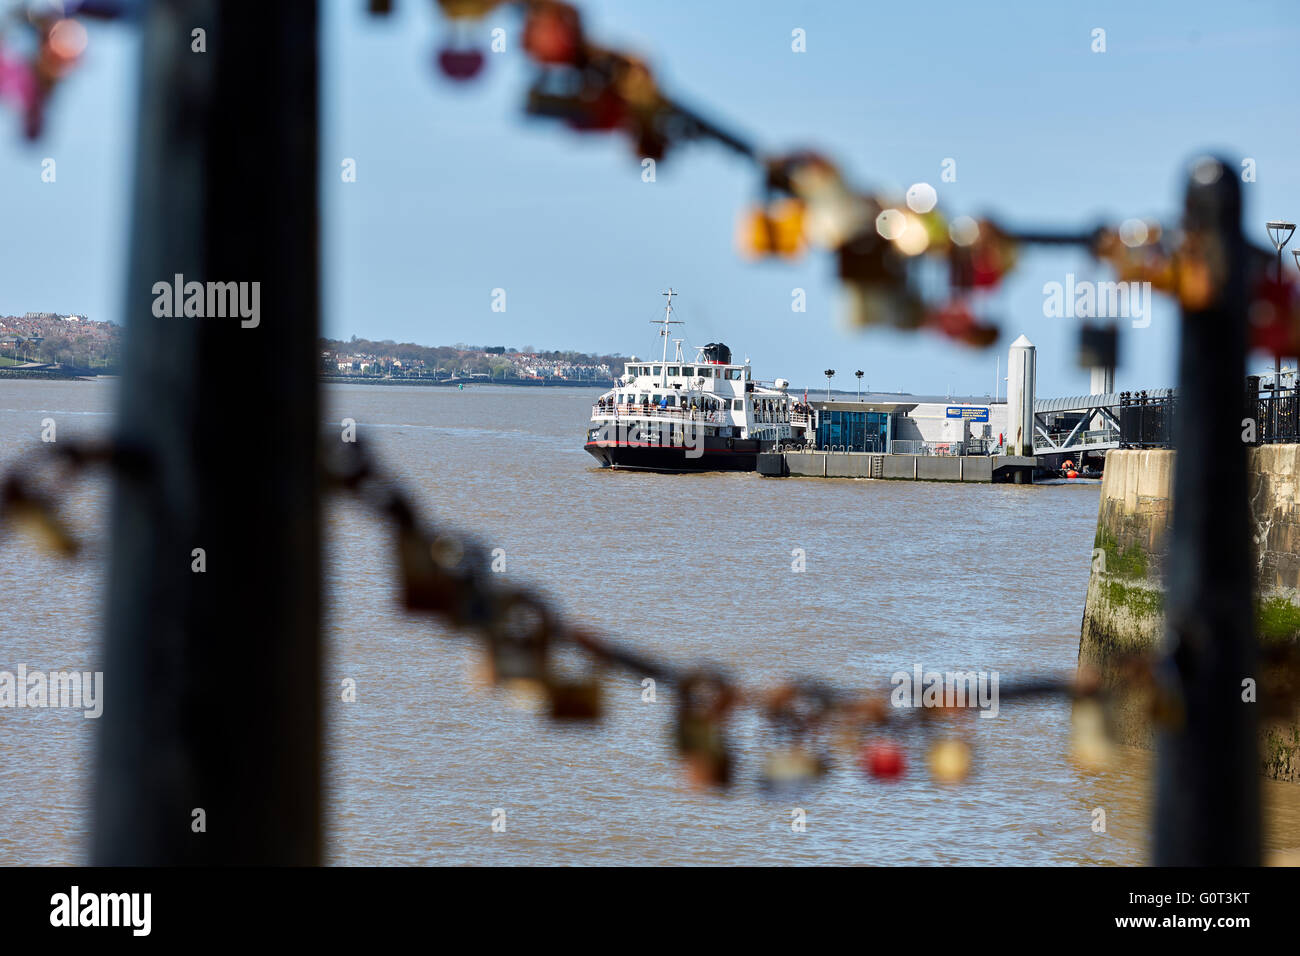 Liverpool albert docks padlocks on railings   Padlocks left by romantic couple hundreds of sentimentales and tourists love locks Stock Photo